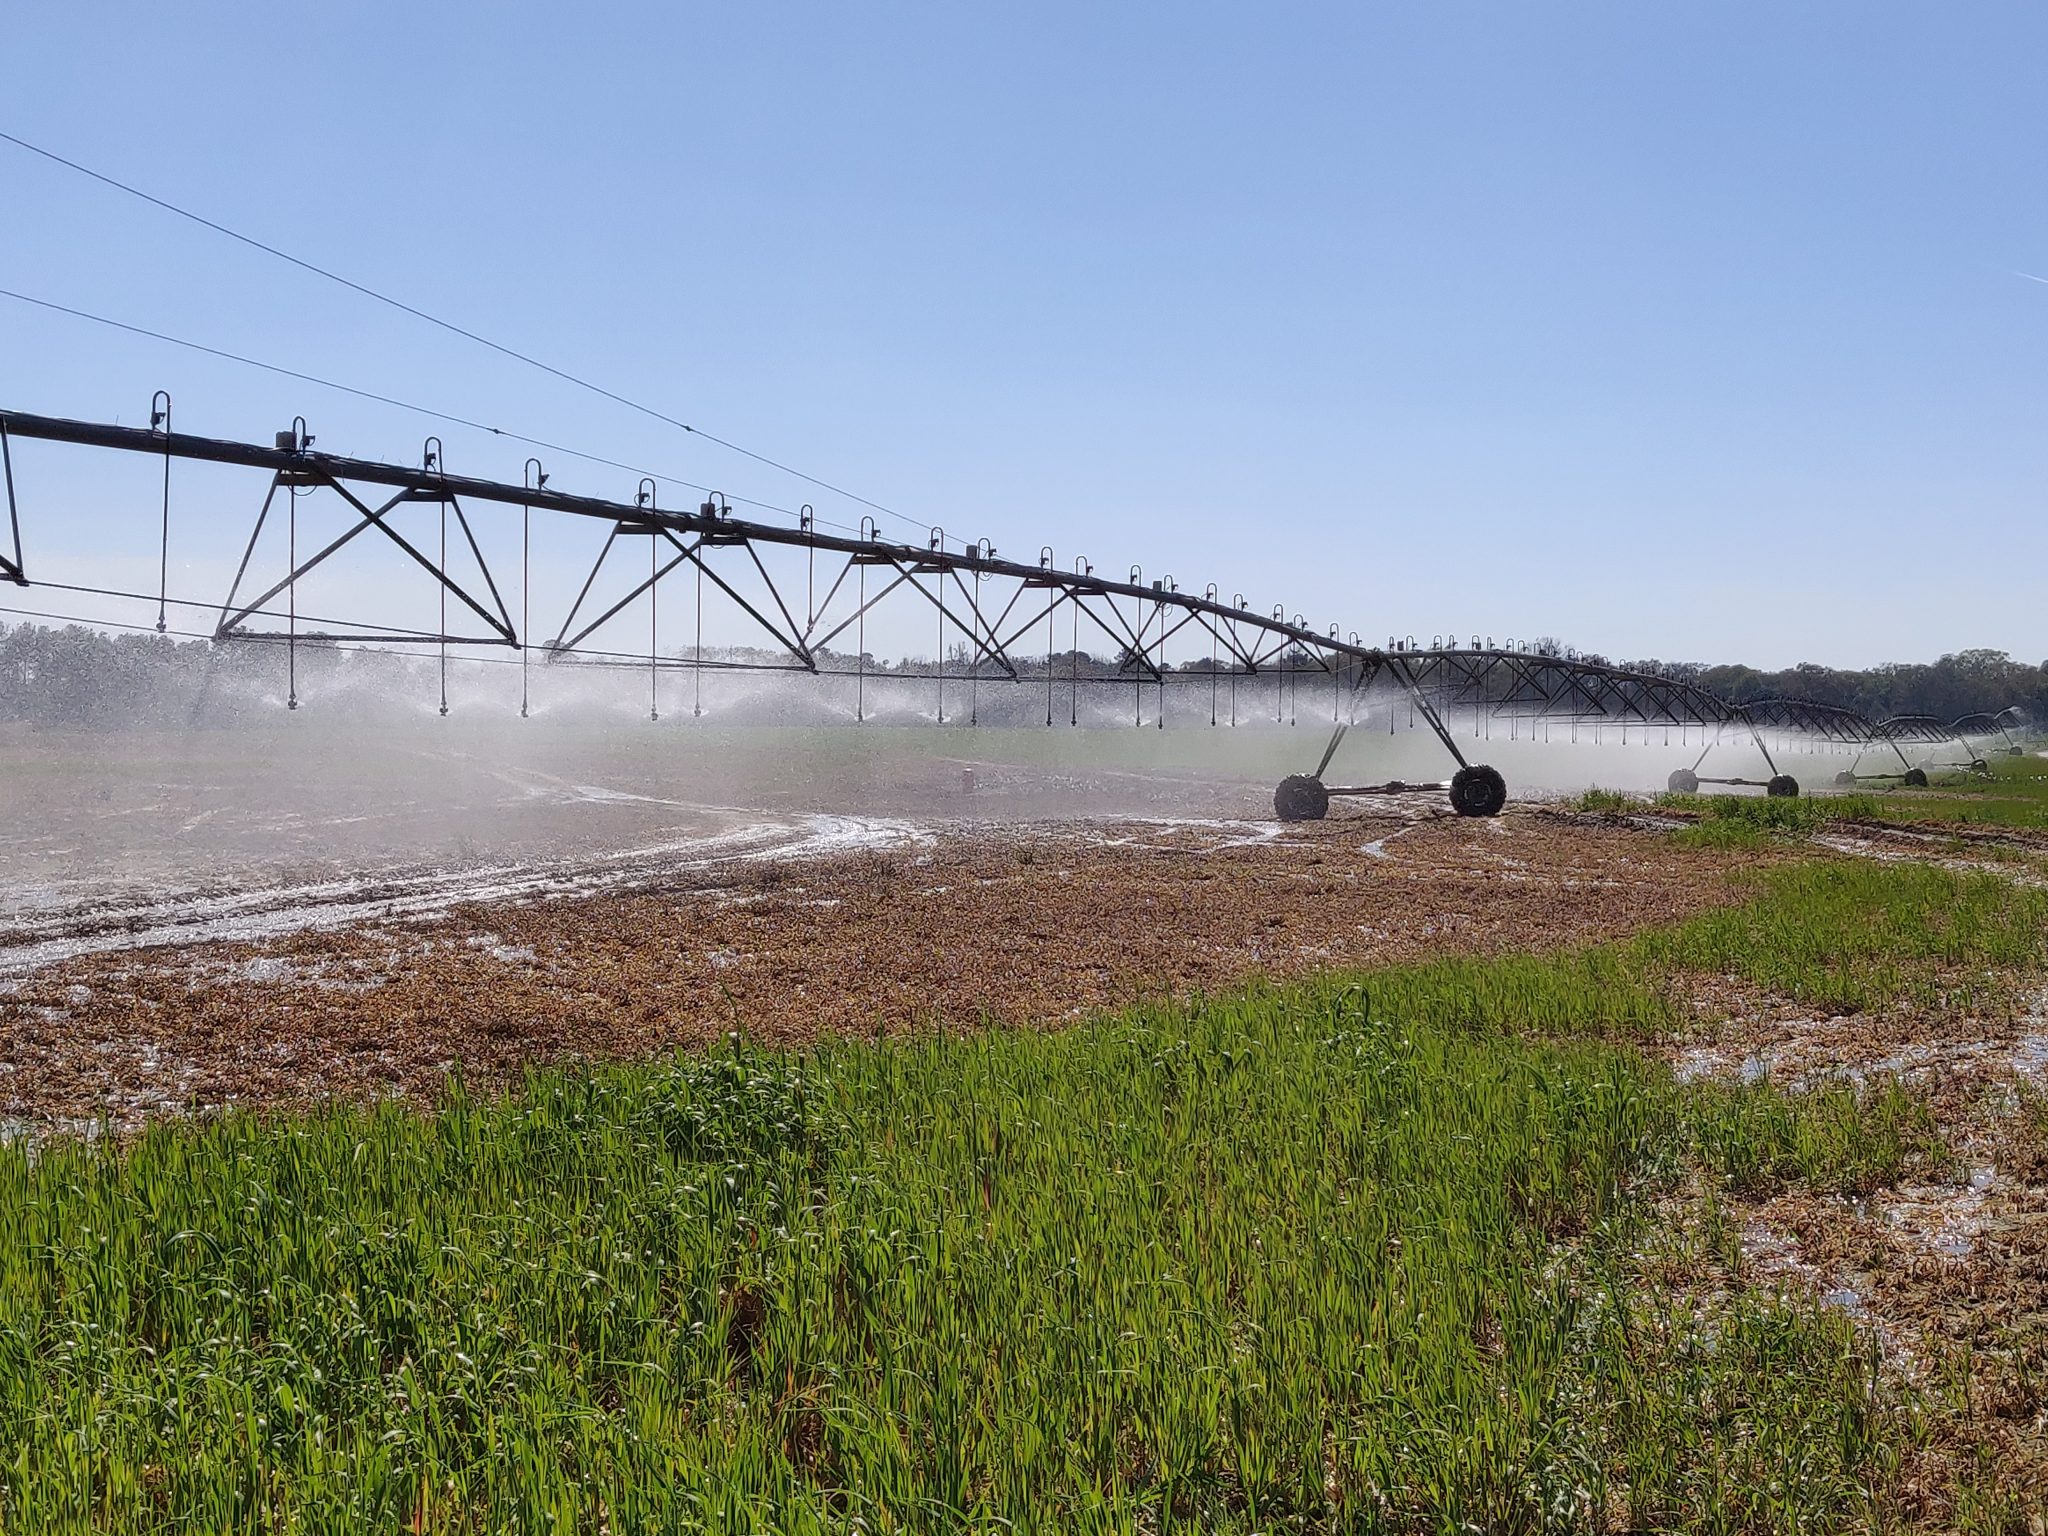 Irrigation pivot in operation